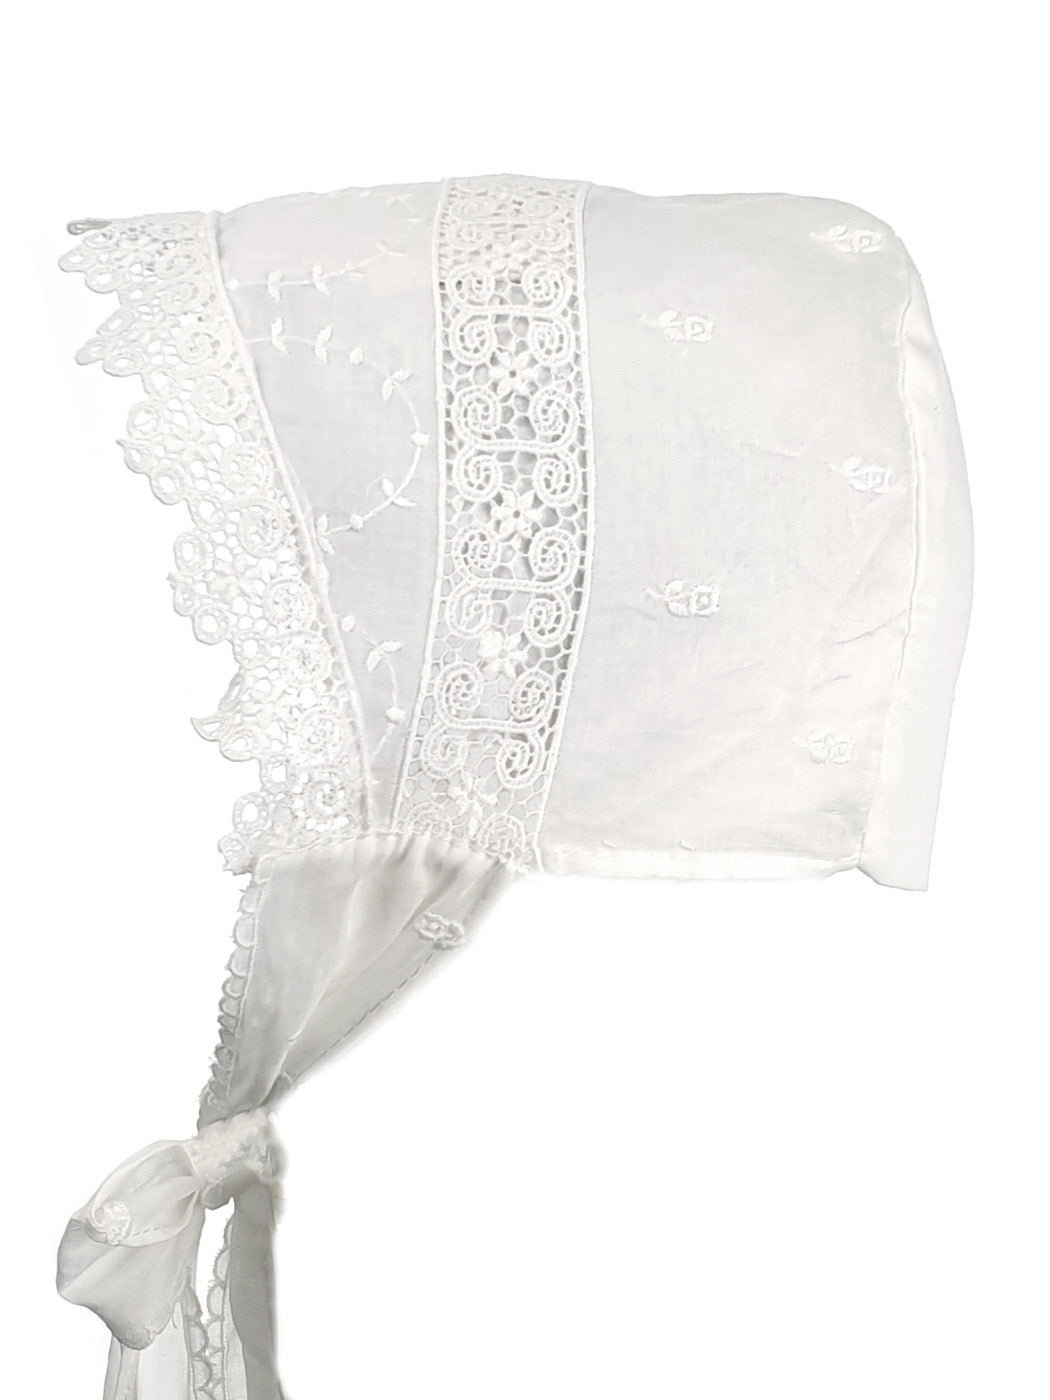 Baptism Hat-bonnet with lace - ZABEL white